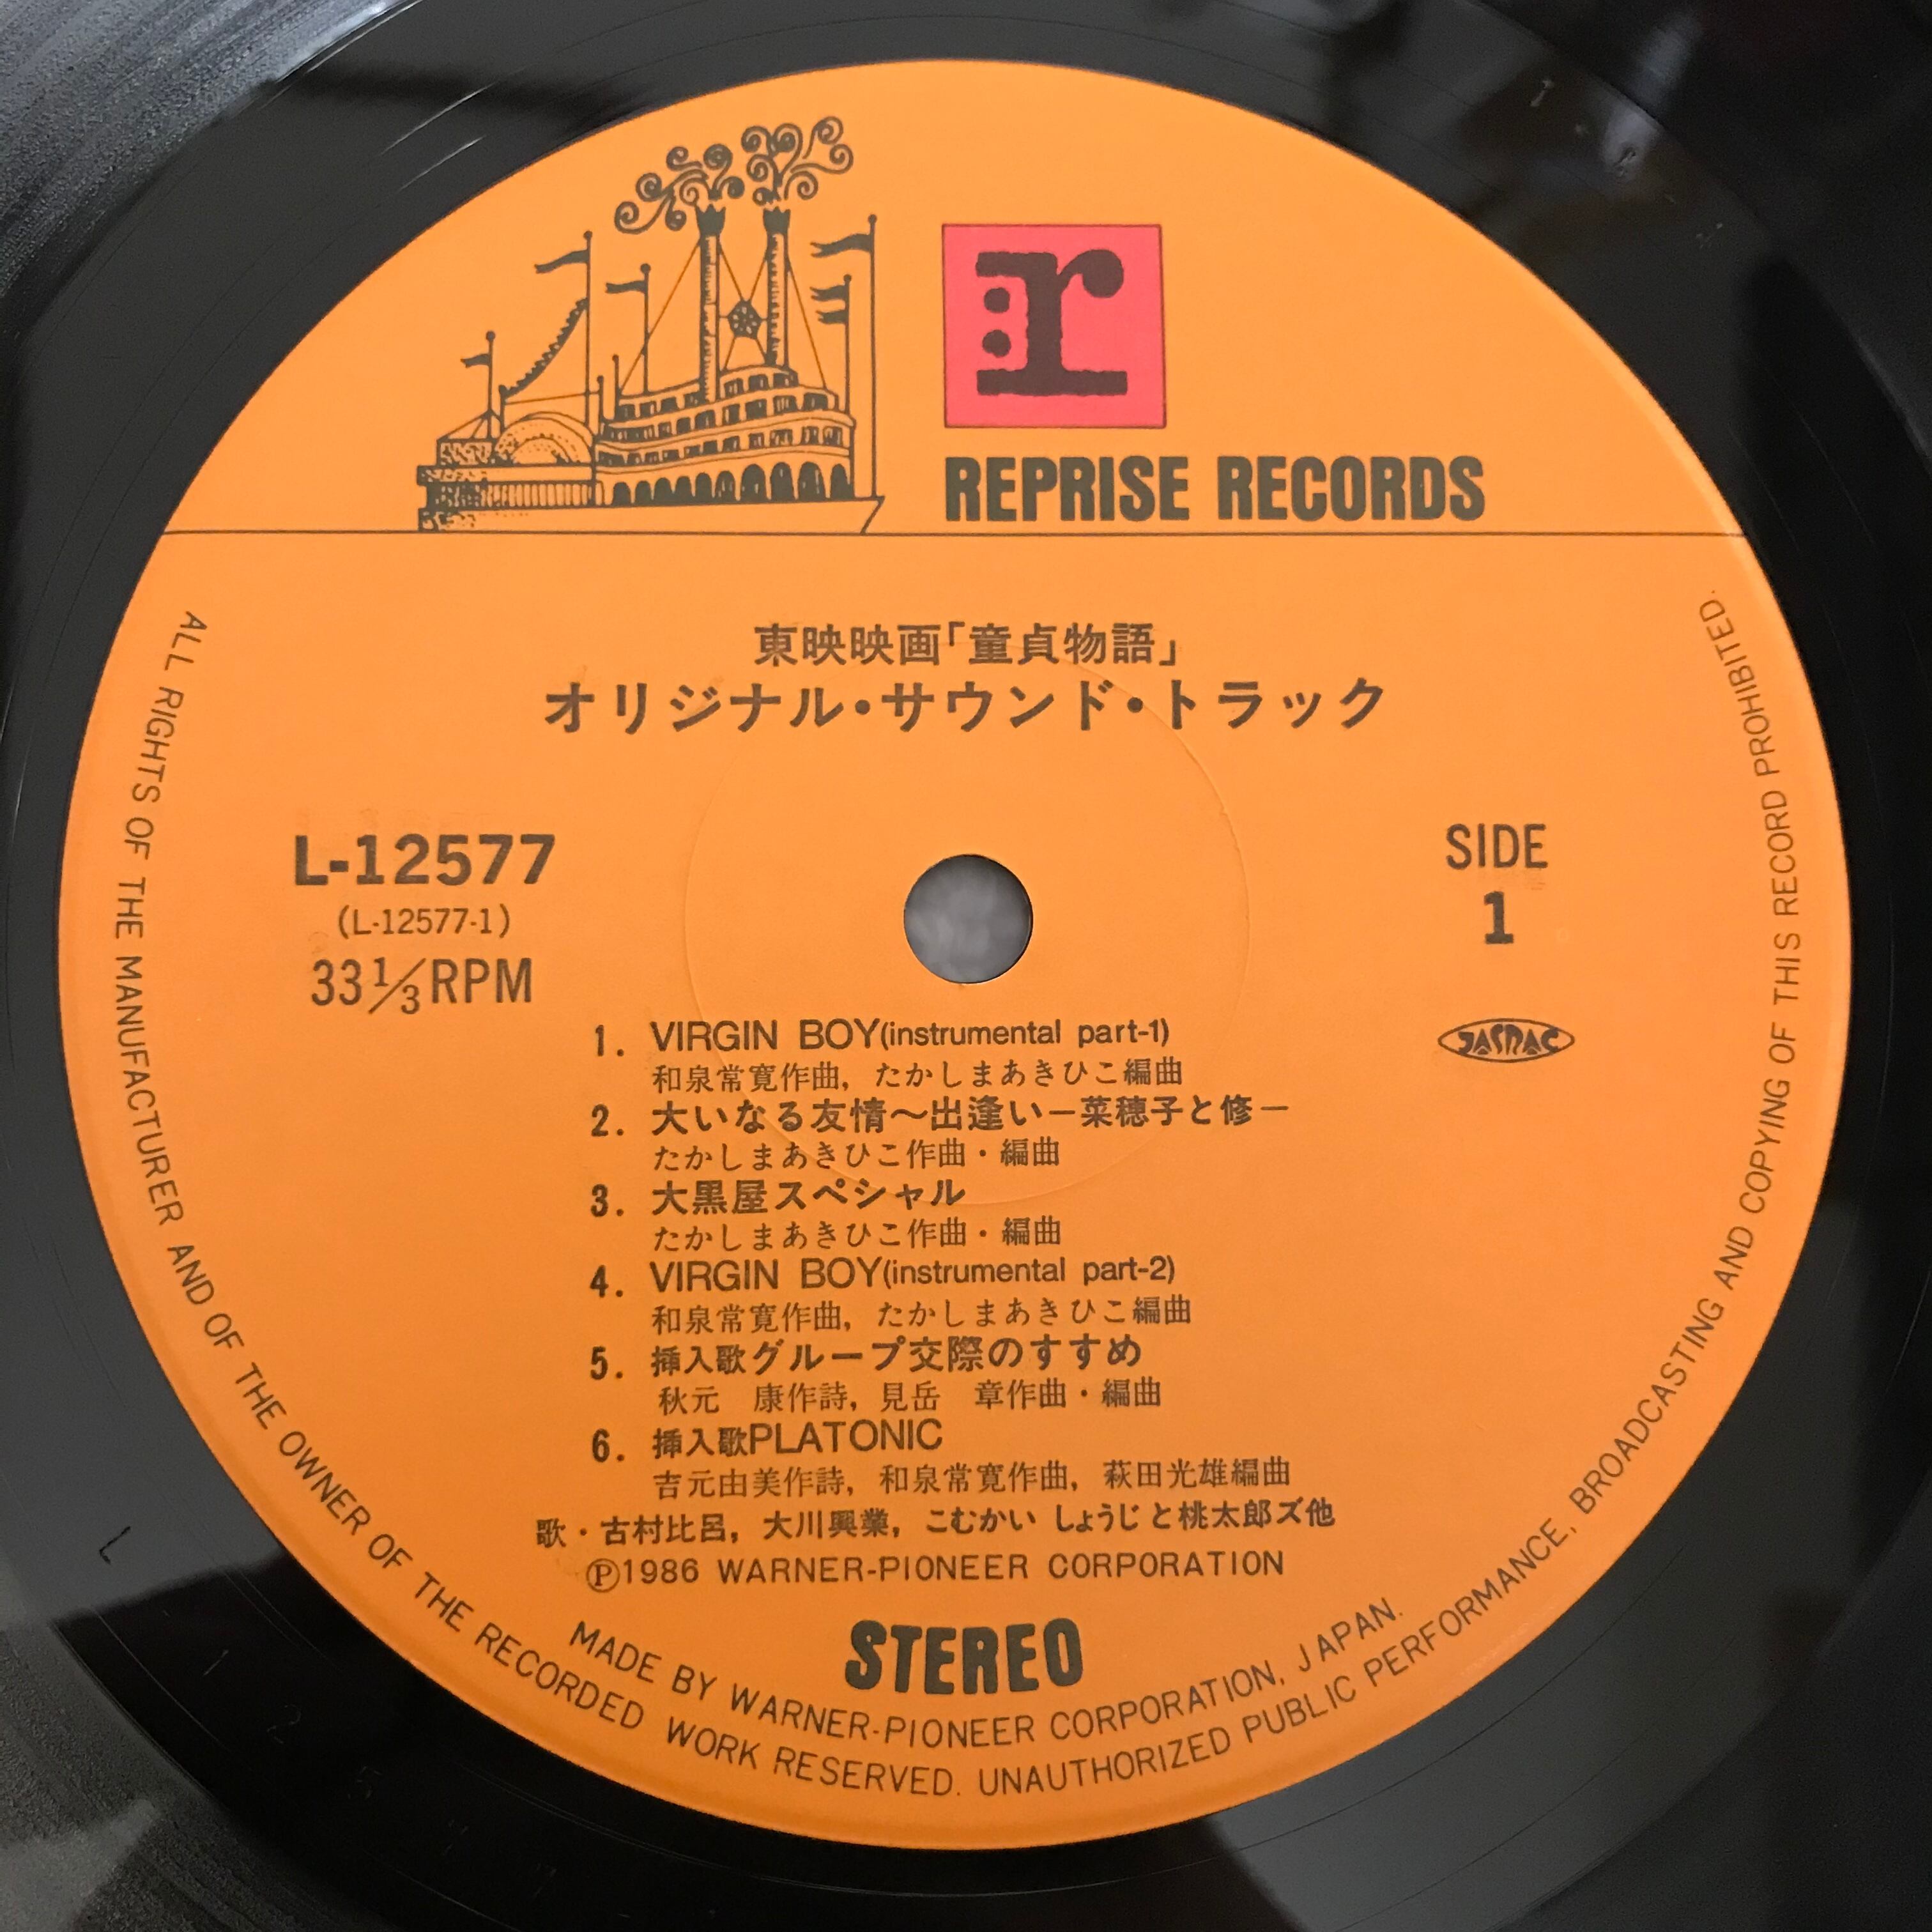 OST 童貞物語 PASSTIME RECORDS パスタイム レコード